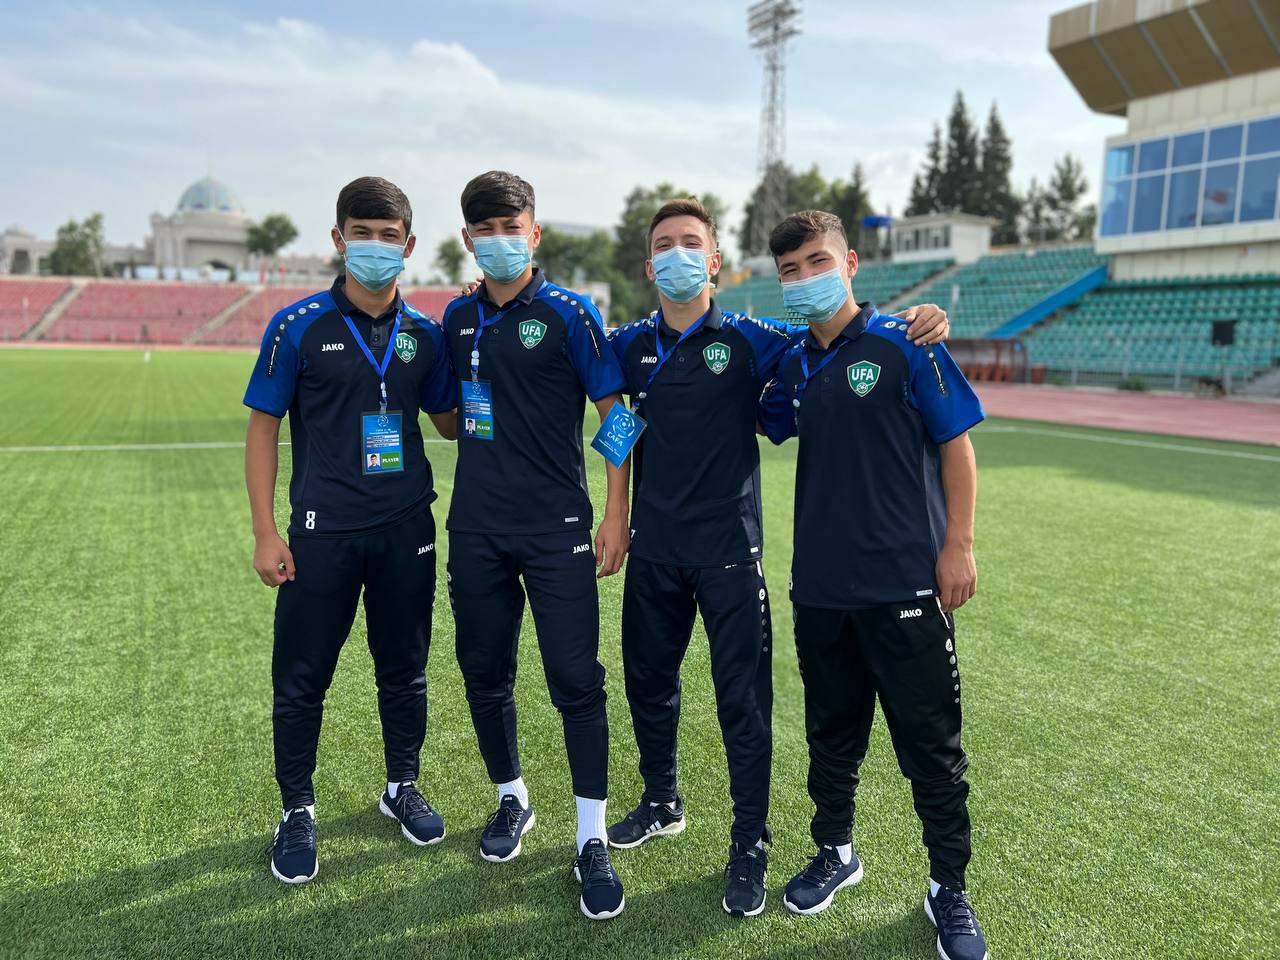 Iran's Mobarakeh Sepahan football team vs Uzbekistan's Olmaliq